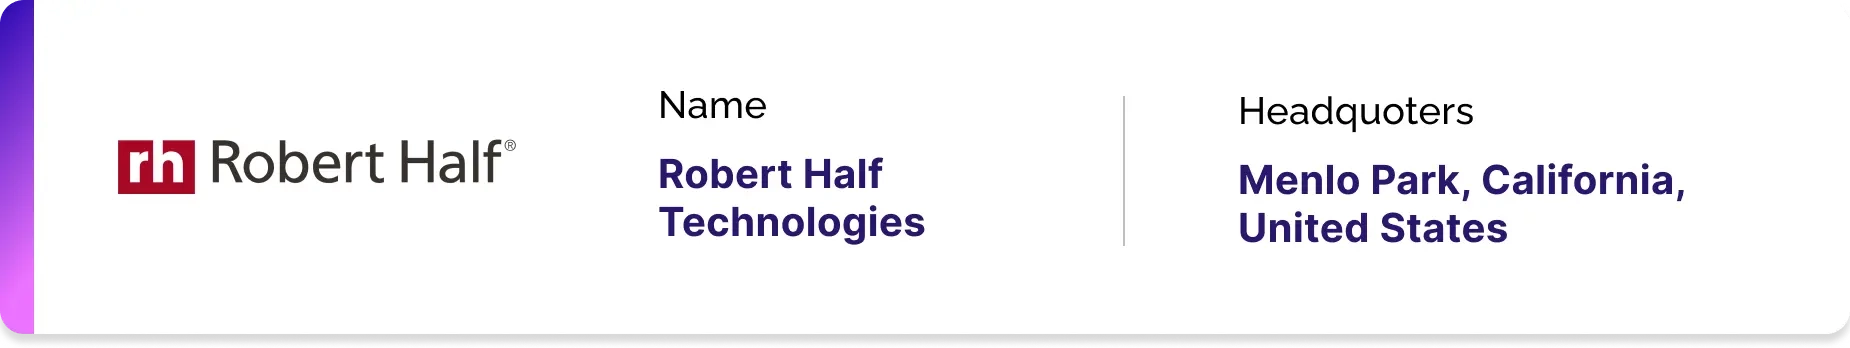 Robert Half Technologies